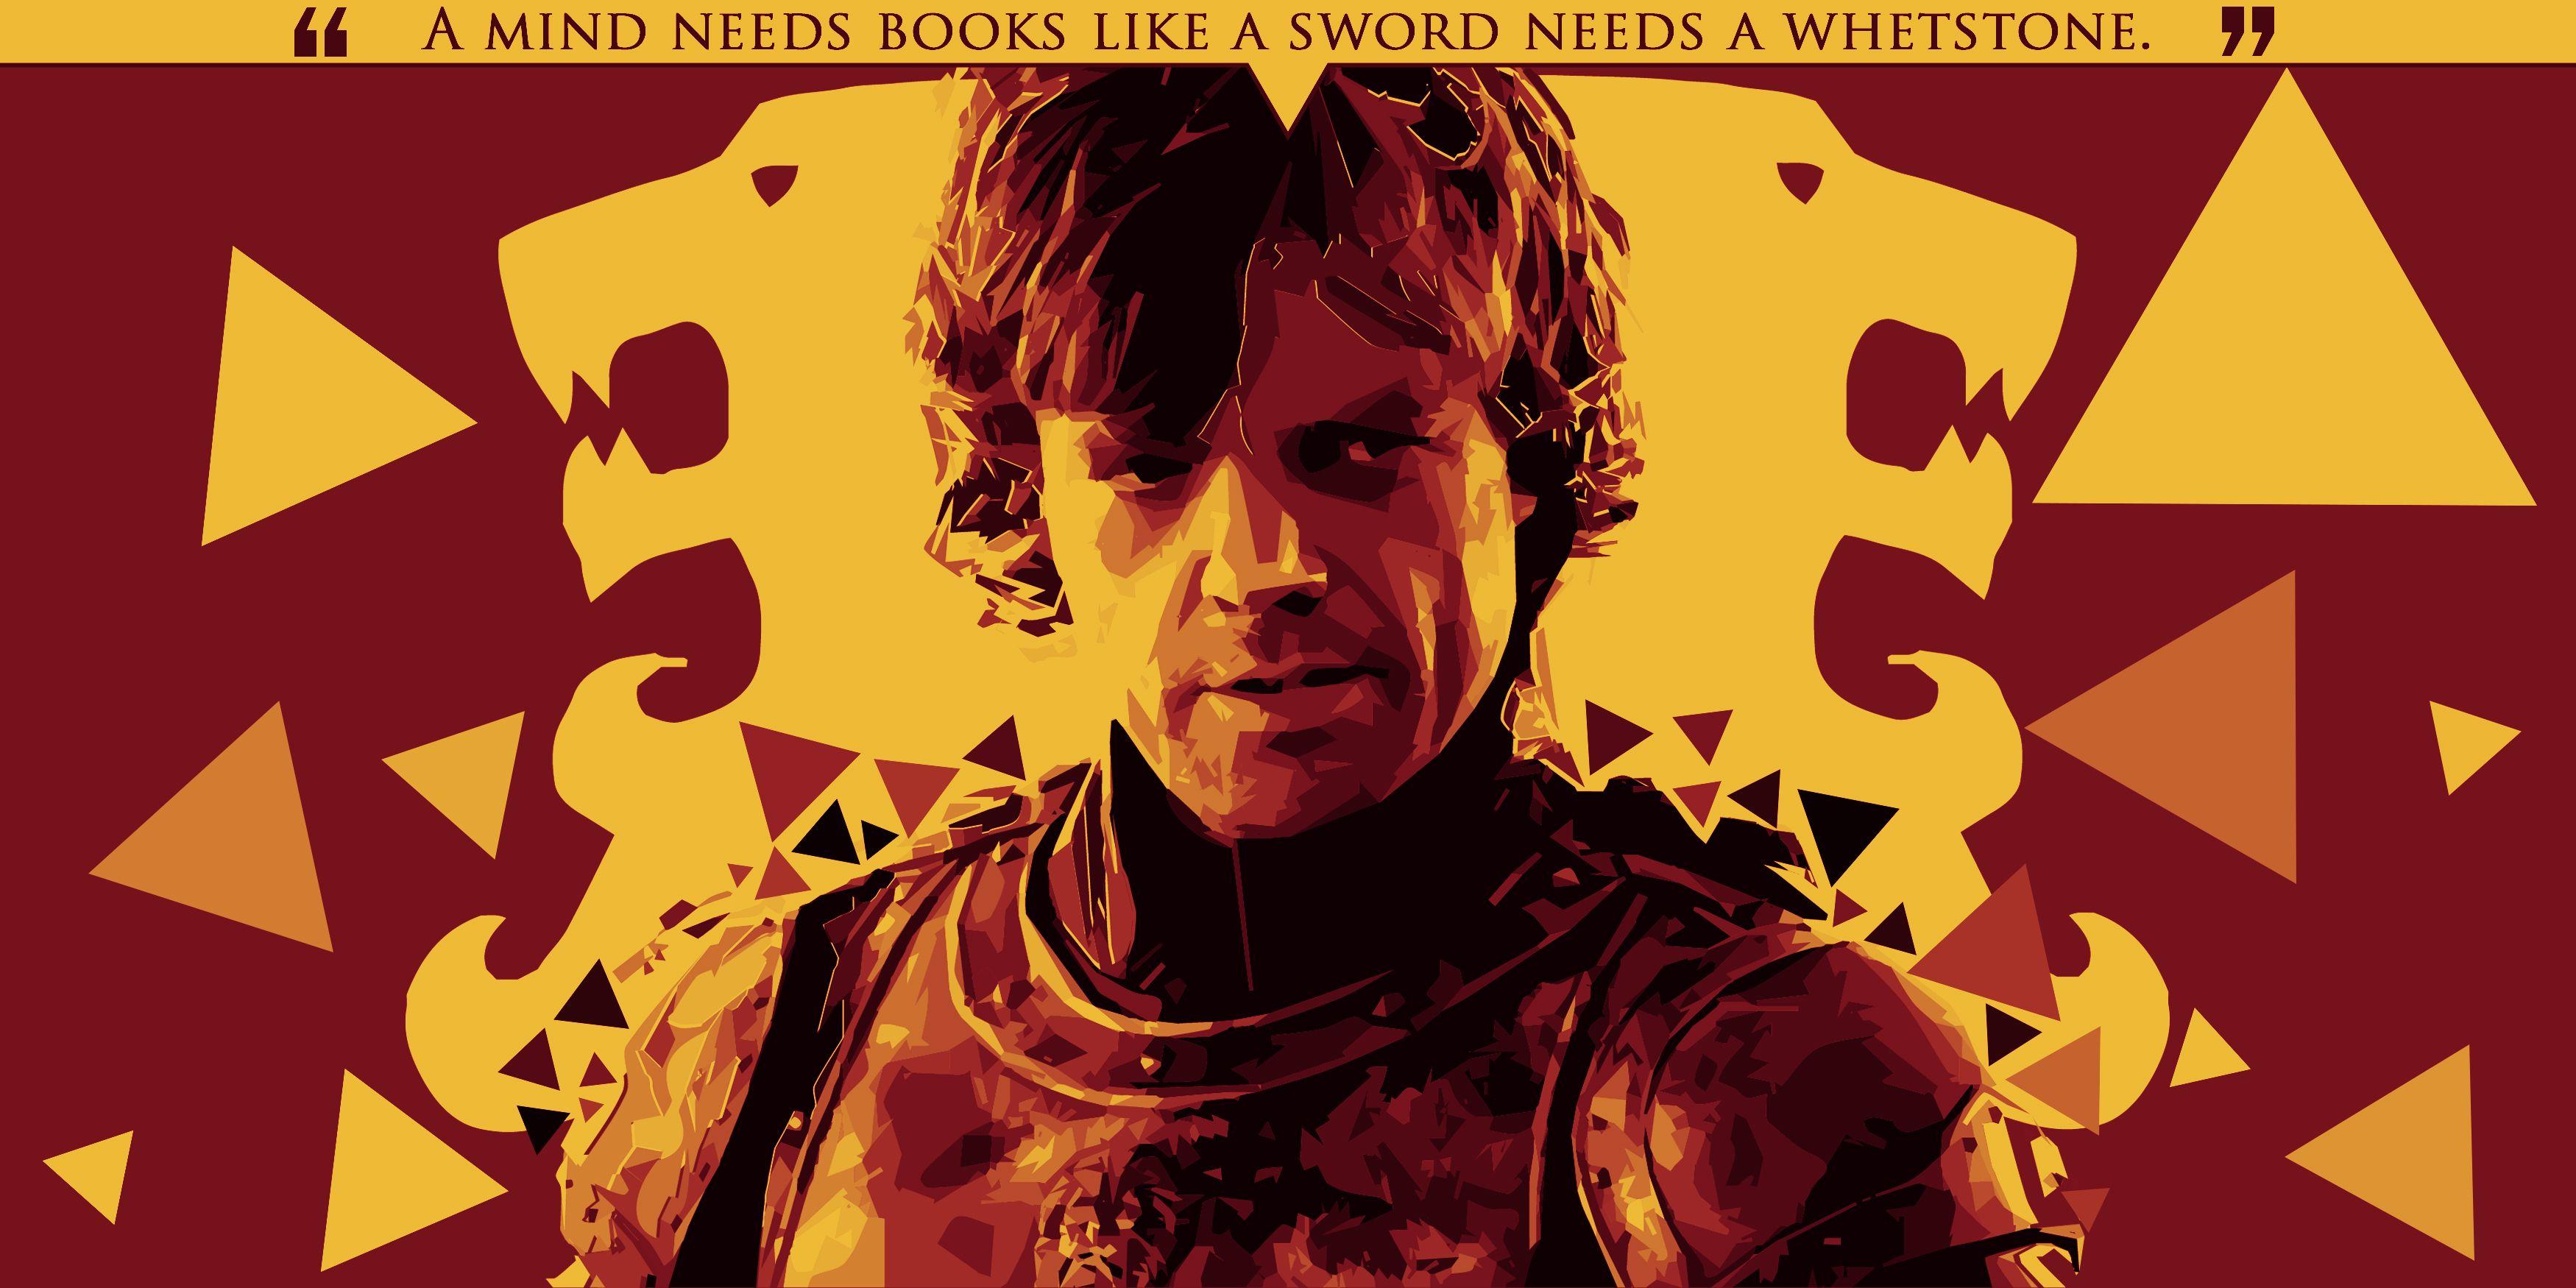 Wallpaper Tyrion Lannister Quote On Desktop.com